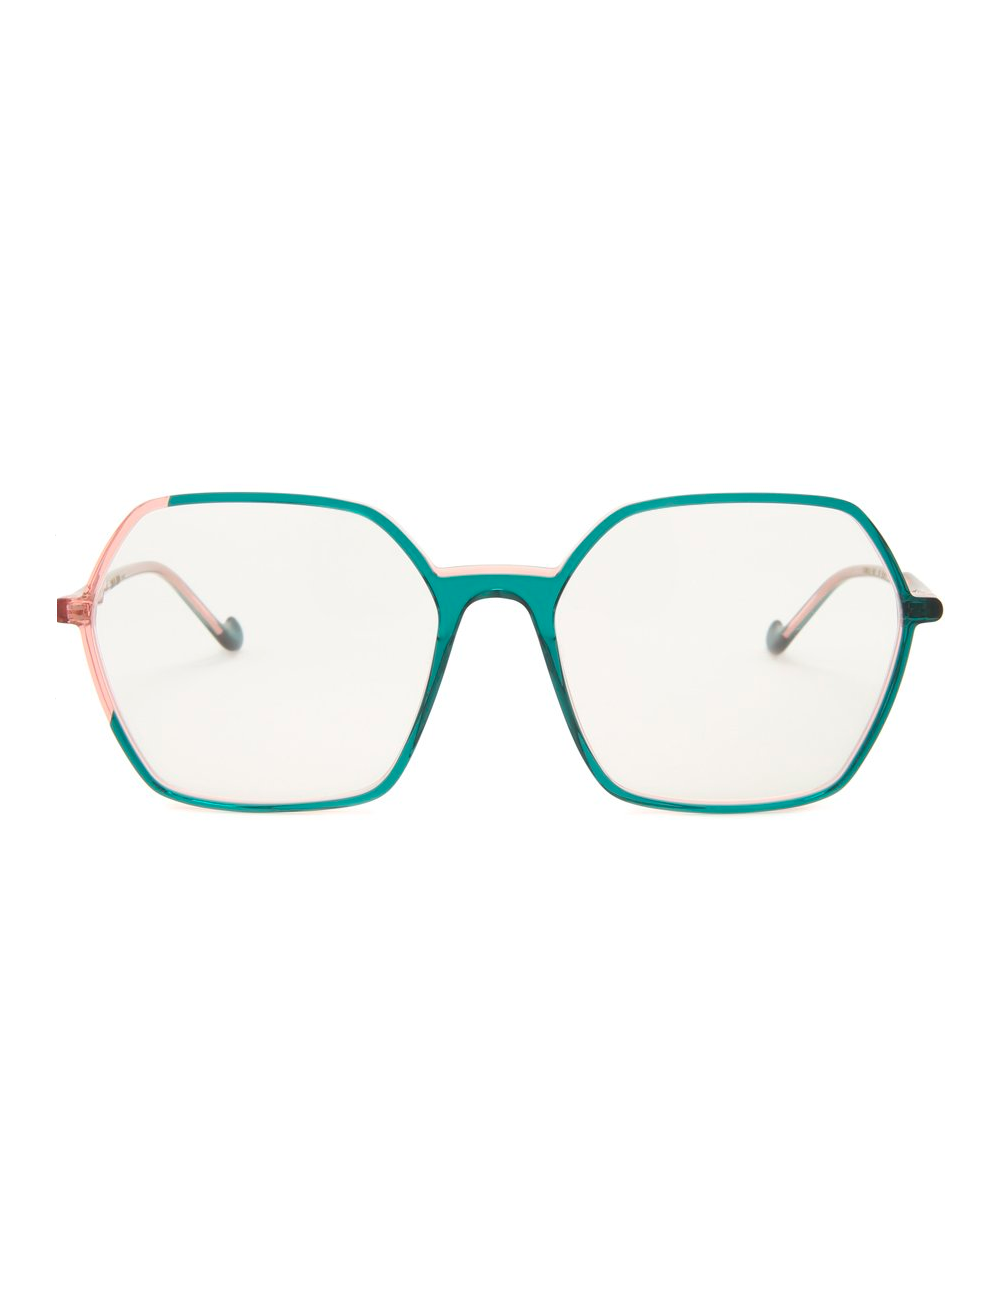 Caroline Abram CAMILLE 668 eyeglasses for women – Otticamauro.biz